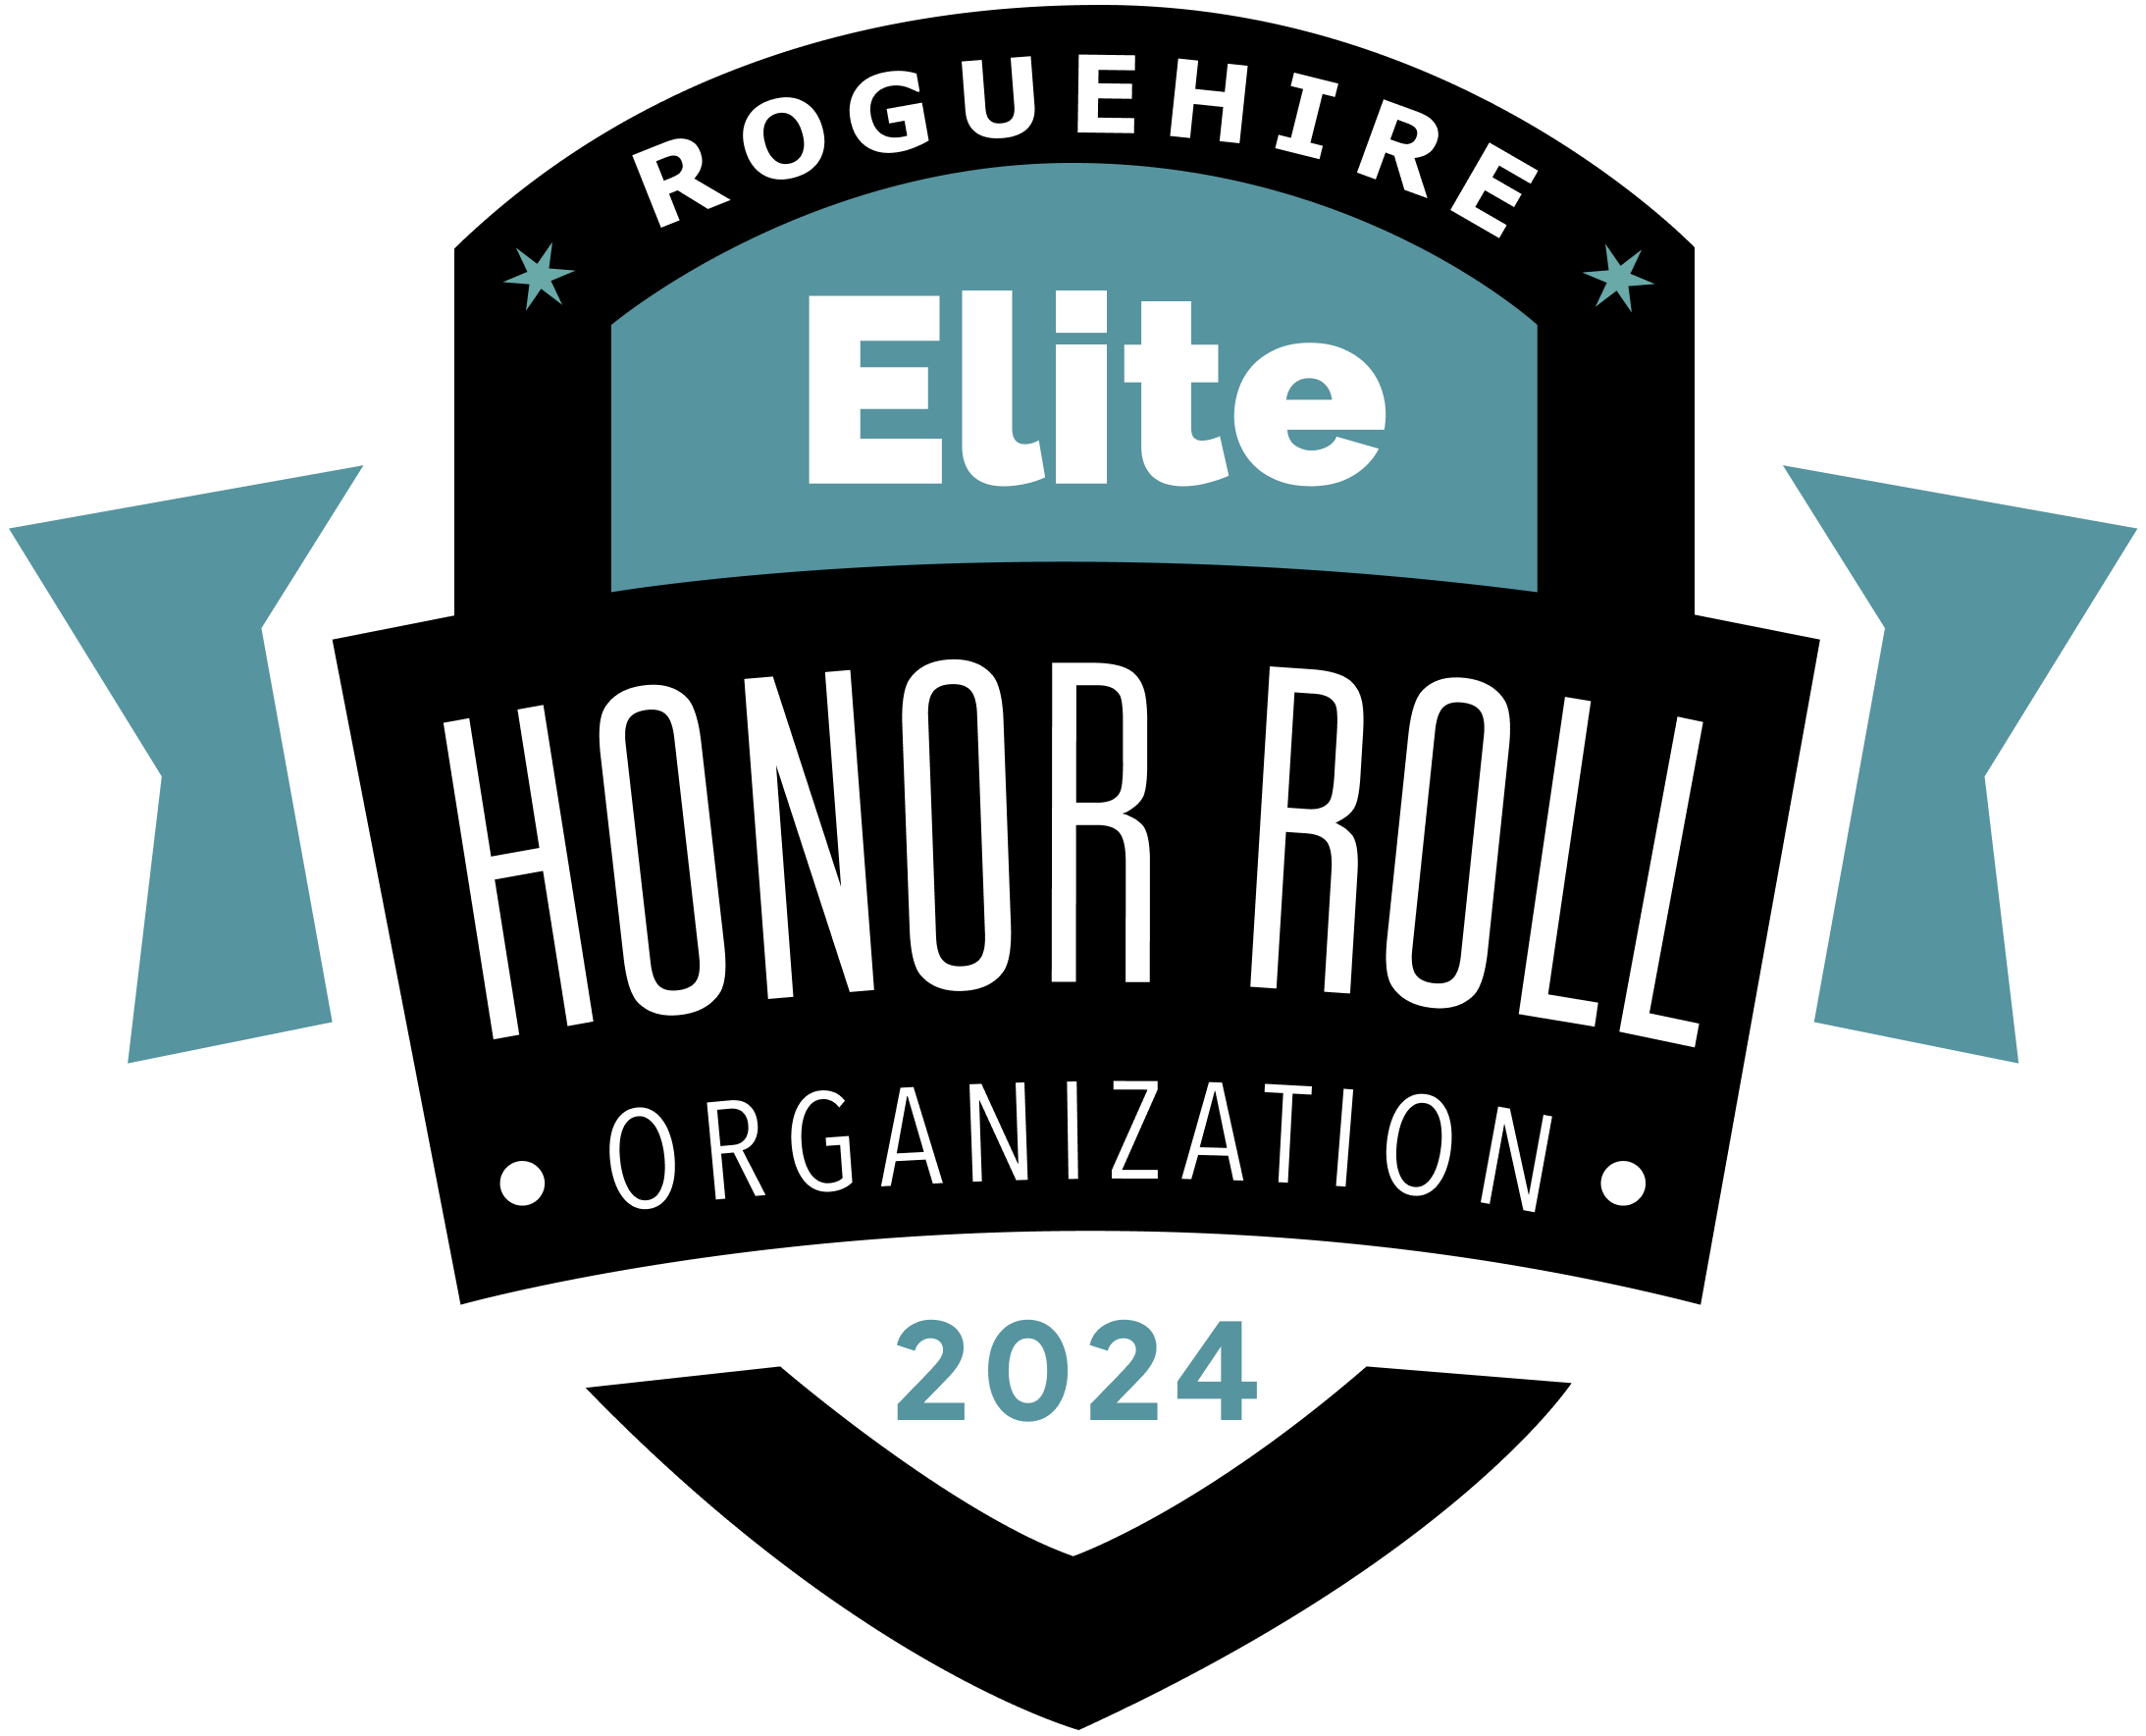 Elite Honor Roll Organization Badge 2024